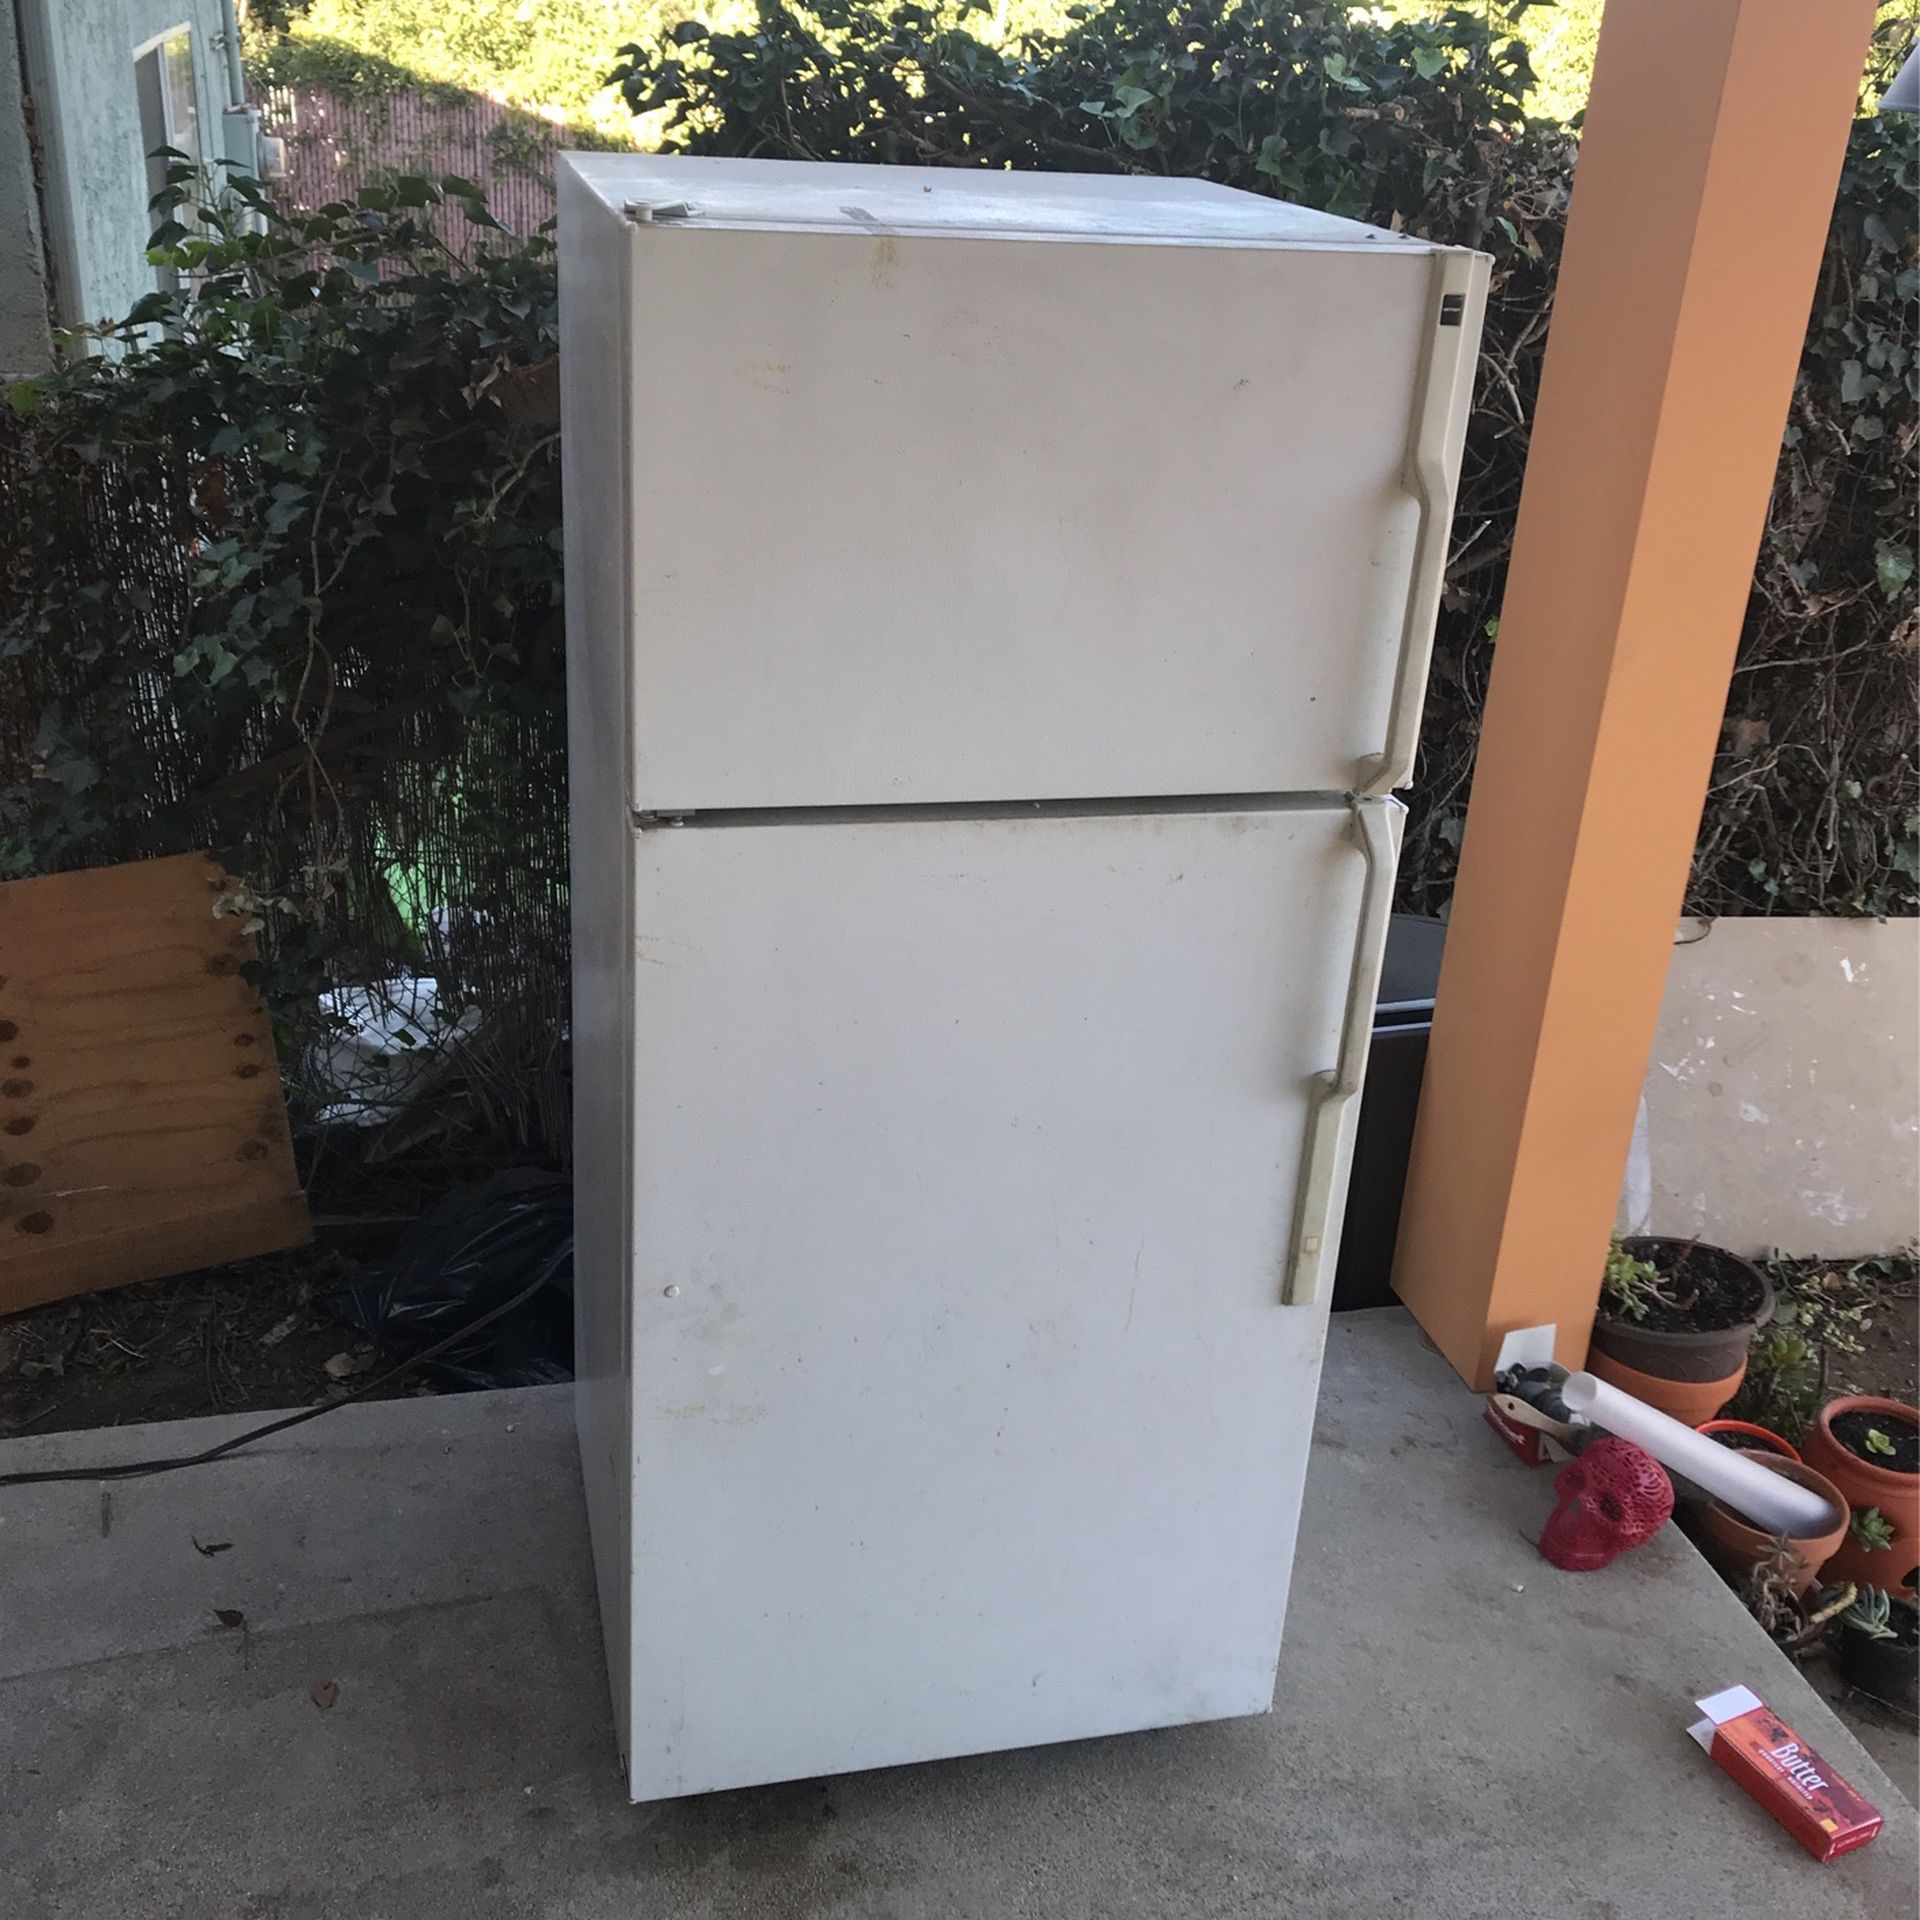 Free apartment size fridge